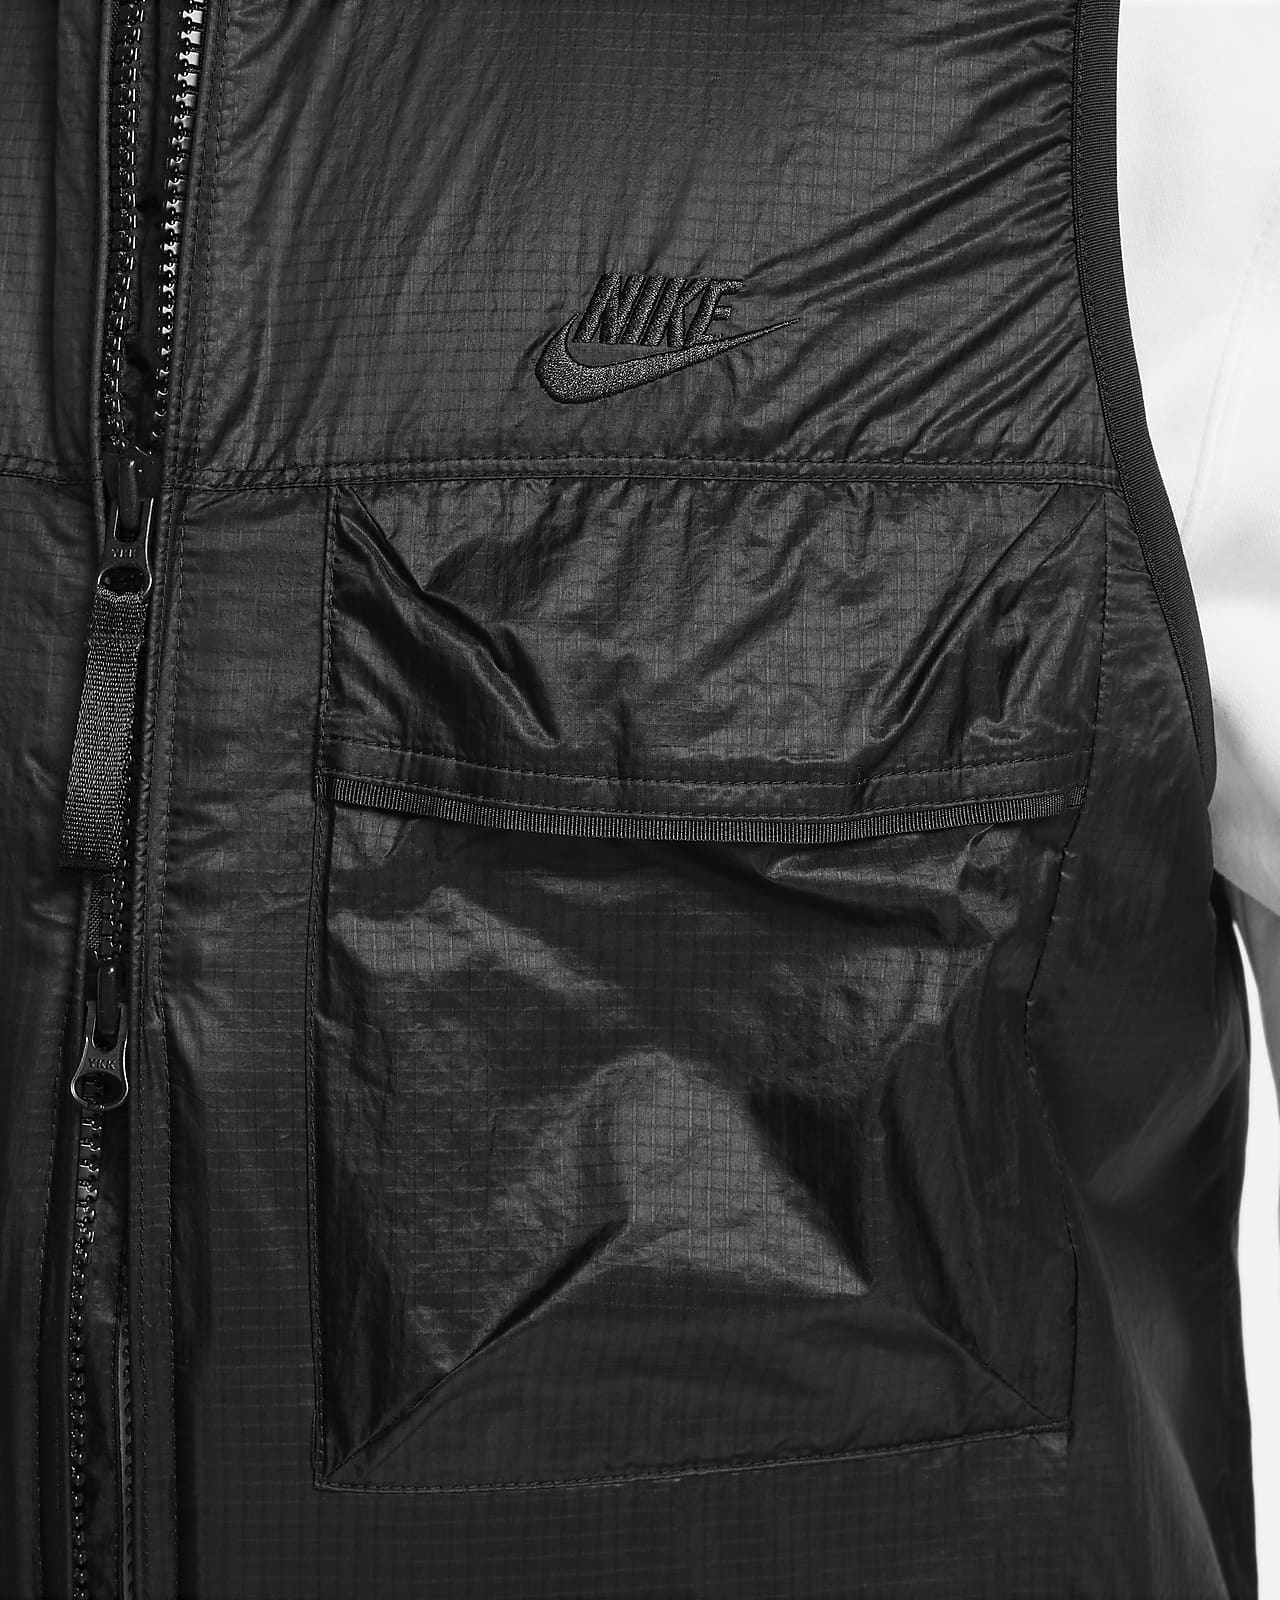 JNGSA Men's Outdoor Cargo Vest with Multi-Pocket Quick-drying Sleeveless  Vest Jacket Utility Vest for Fishing Hiking Fintness Khaki M - Walmart.com